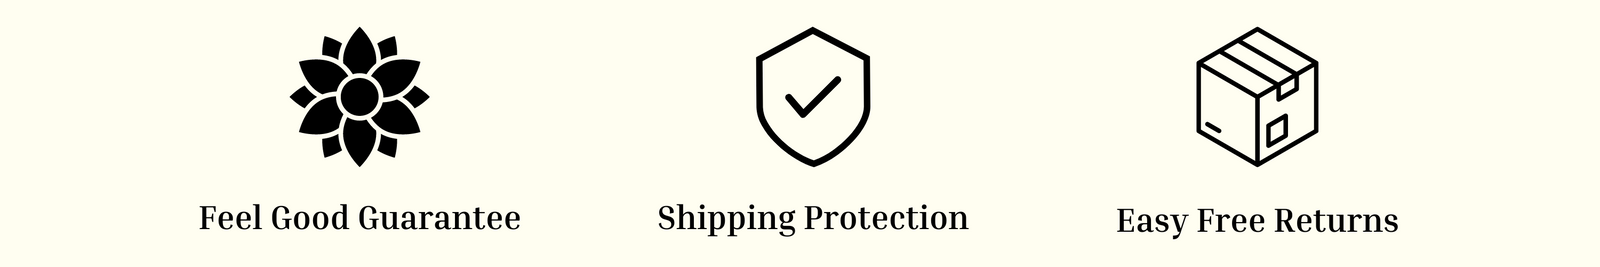 Feel good guarantee, shipping protection, easy free returns